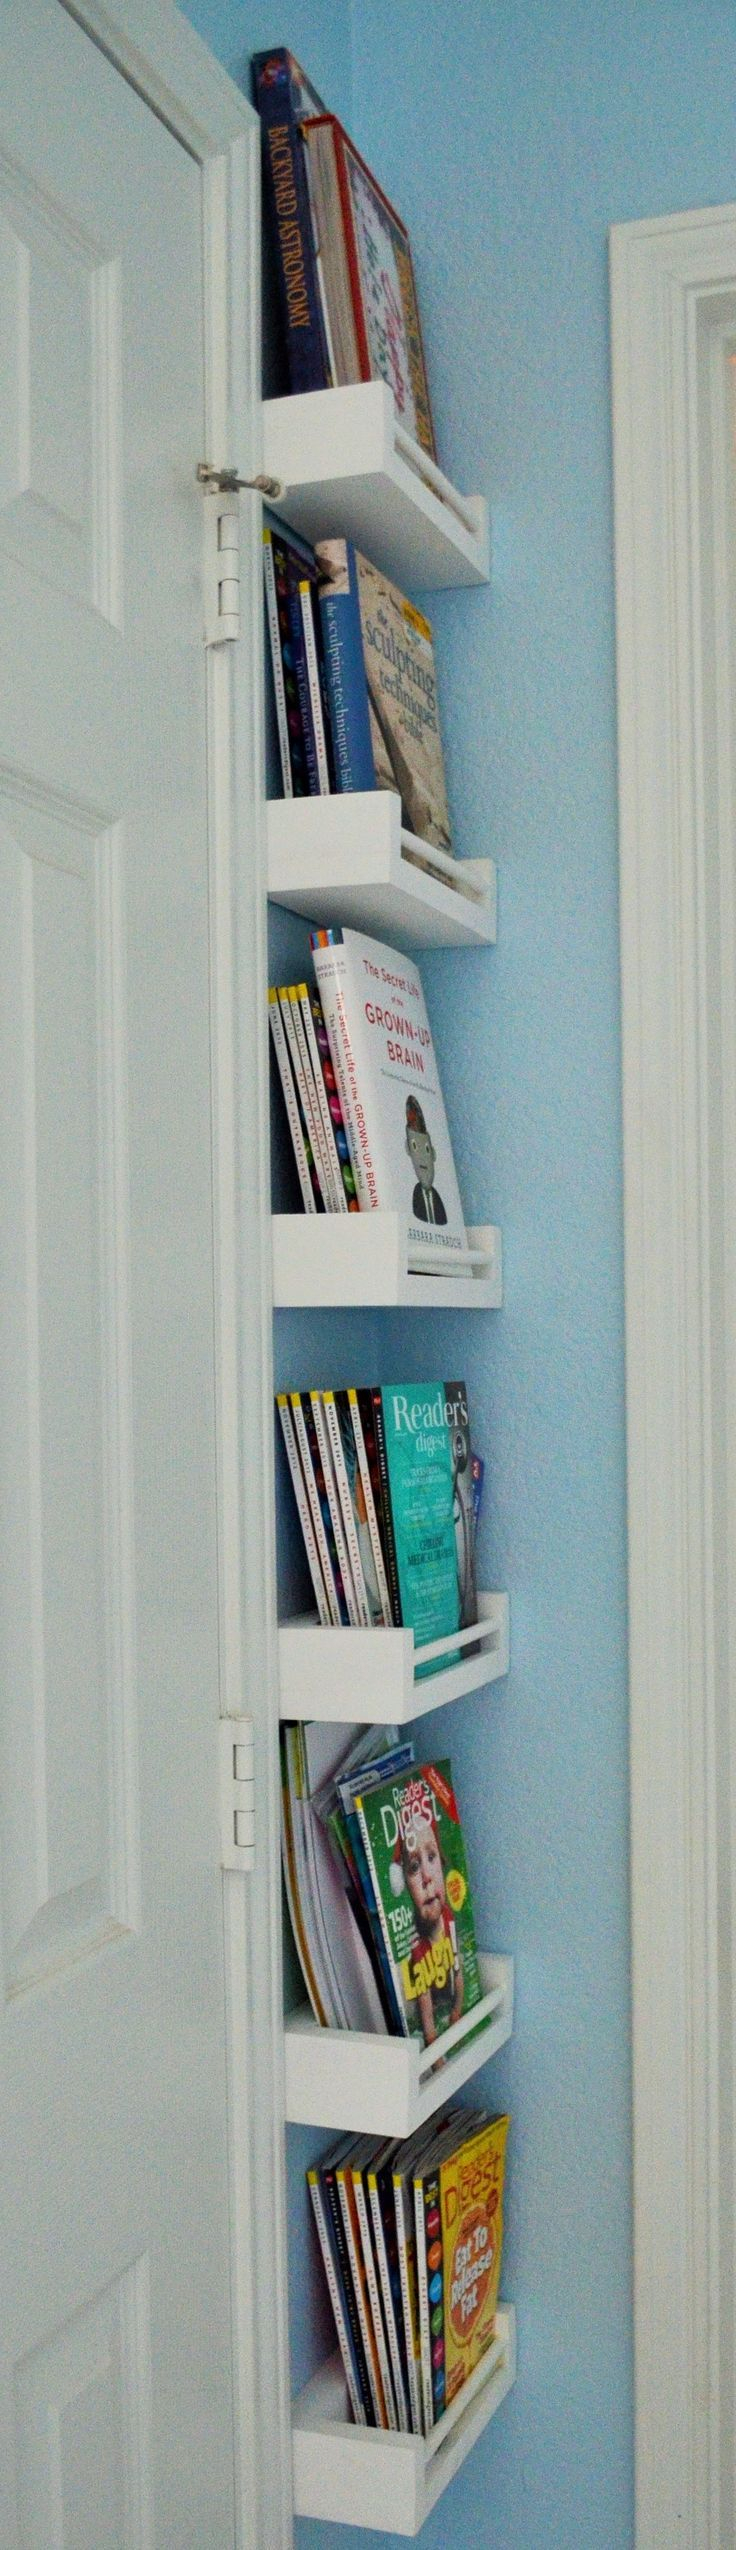 Small Corner Bookshelves Work Great For Behind Door In with regard to dimensions 736 X 2550